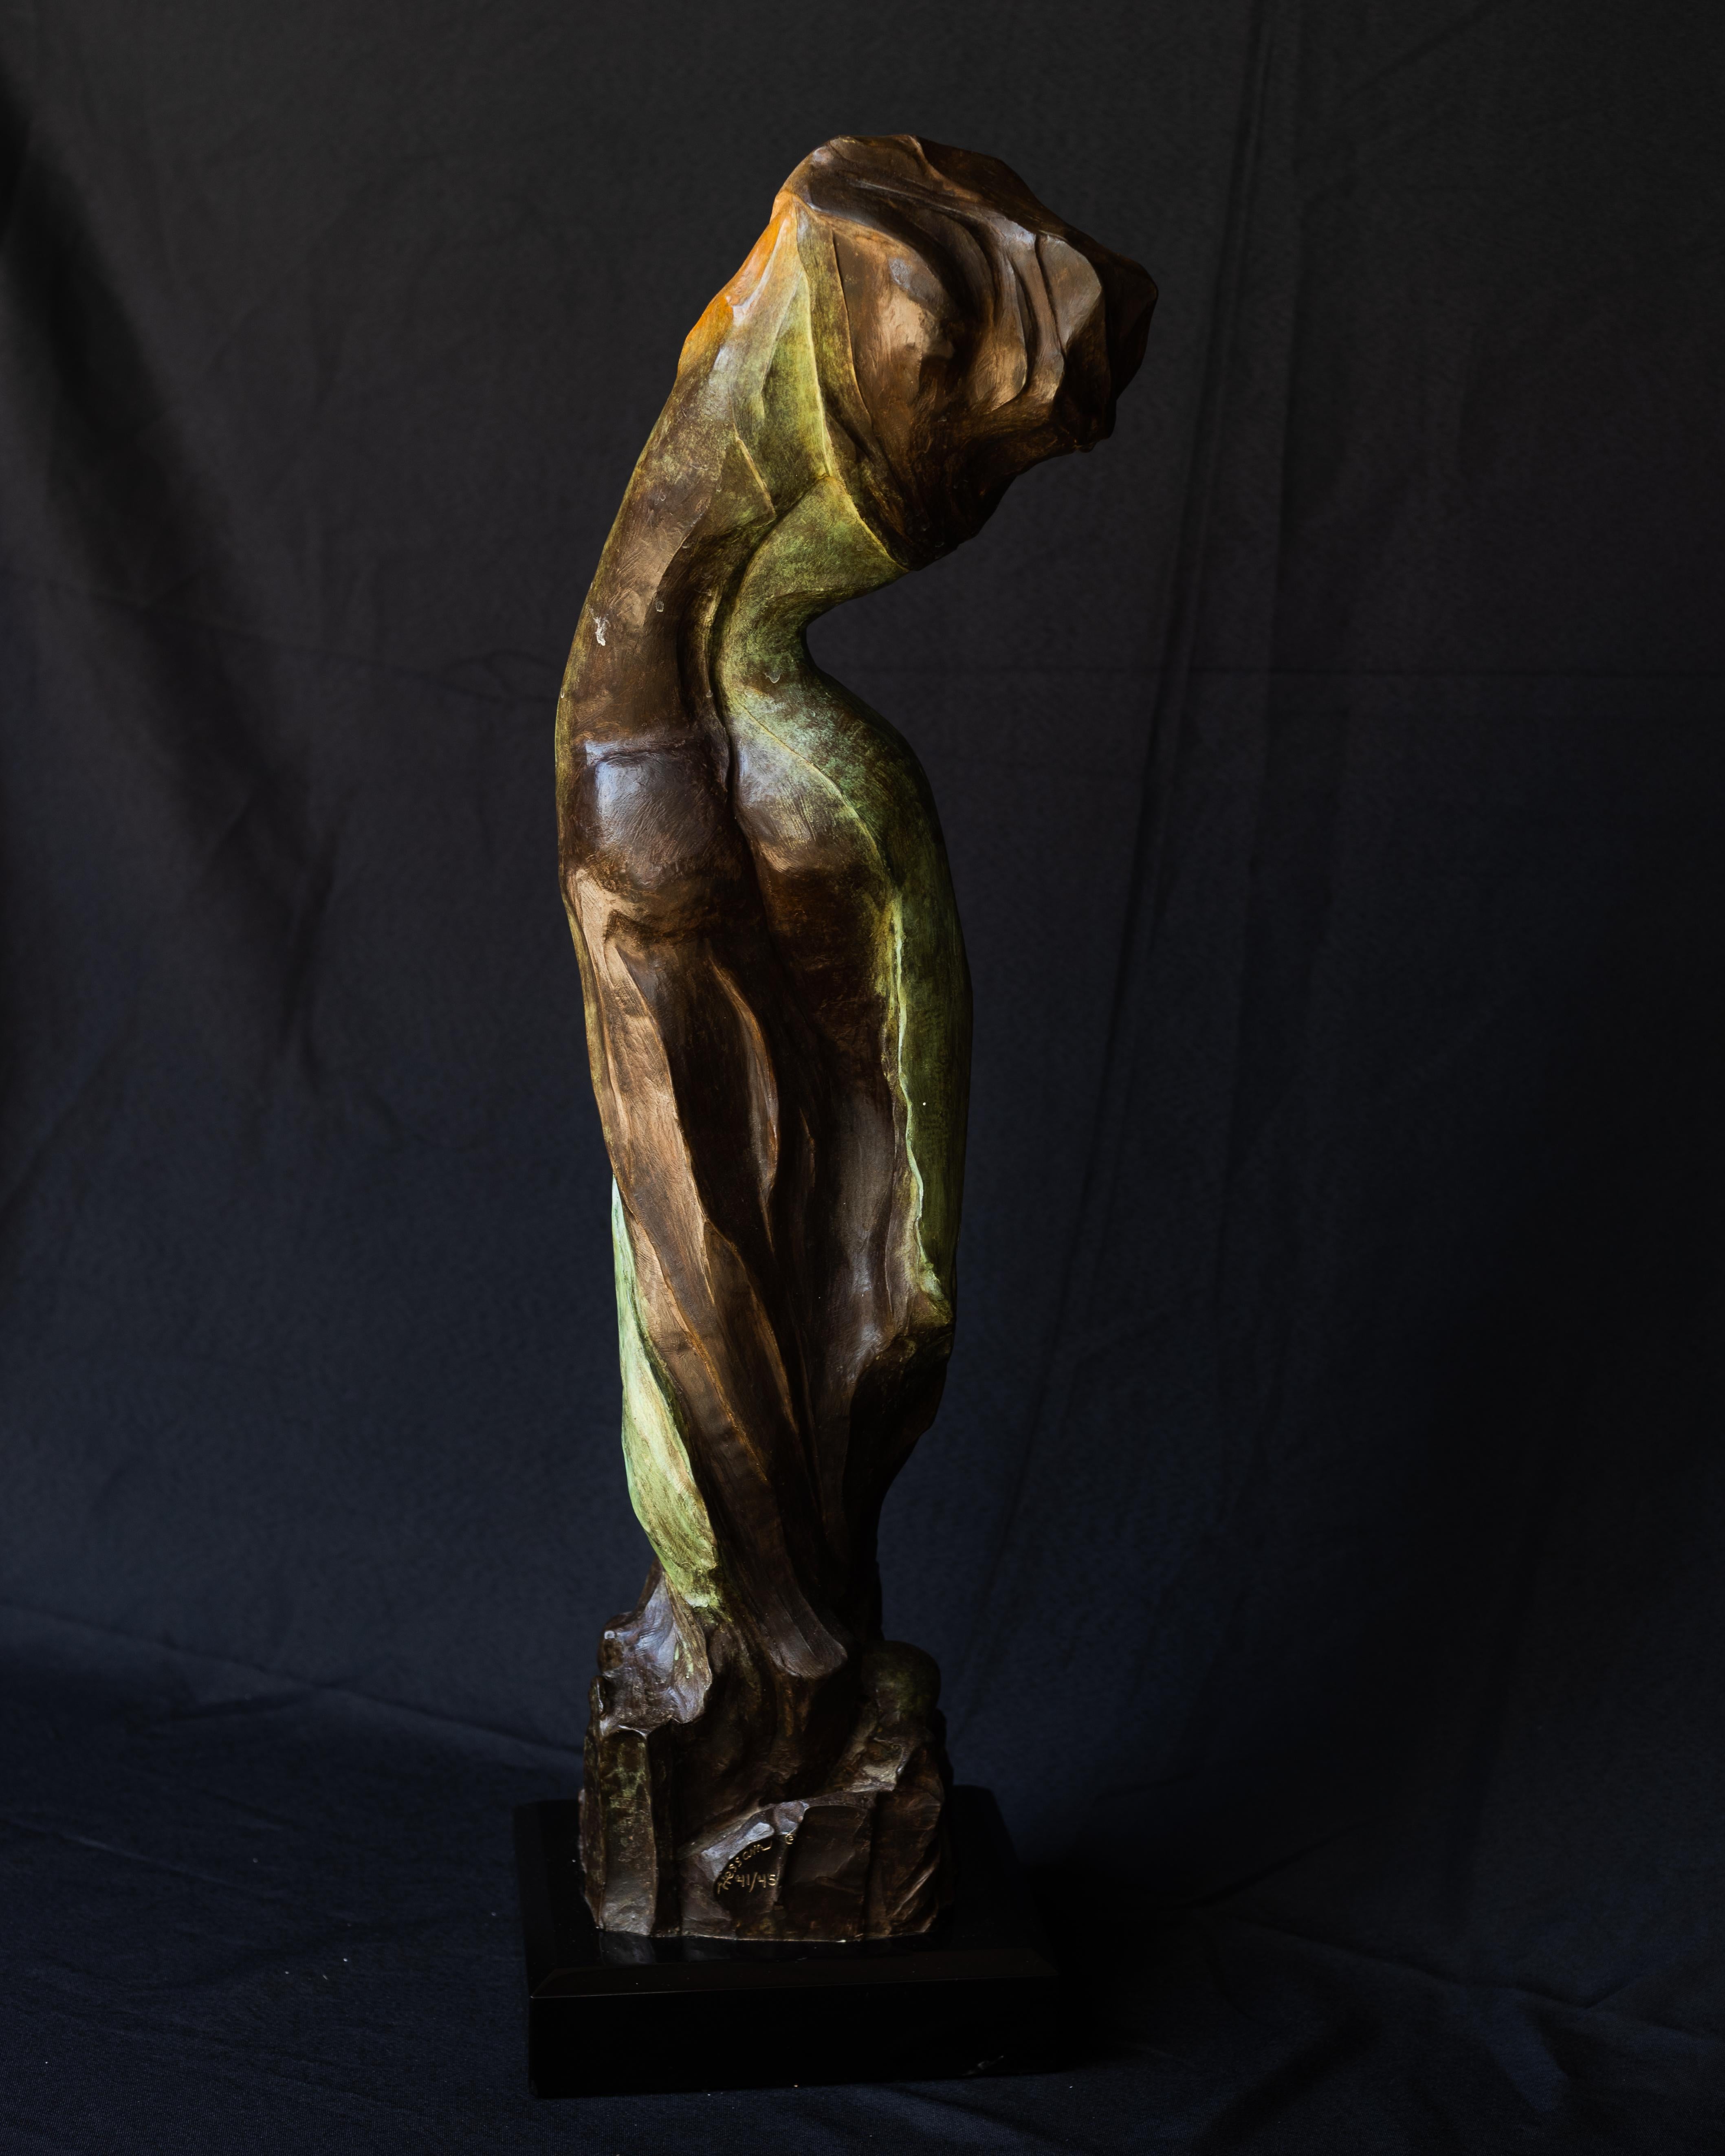 Revelation - Sculpture by Hessam Abrishami